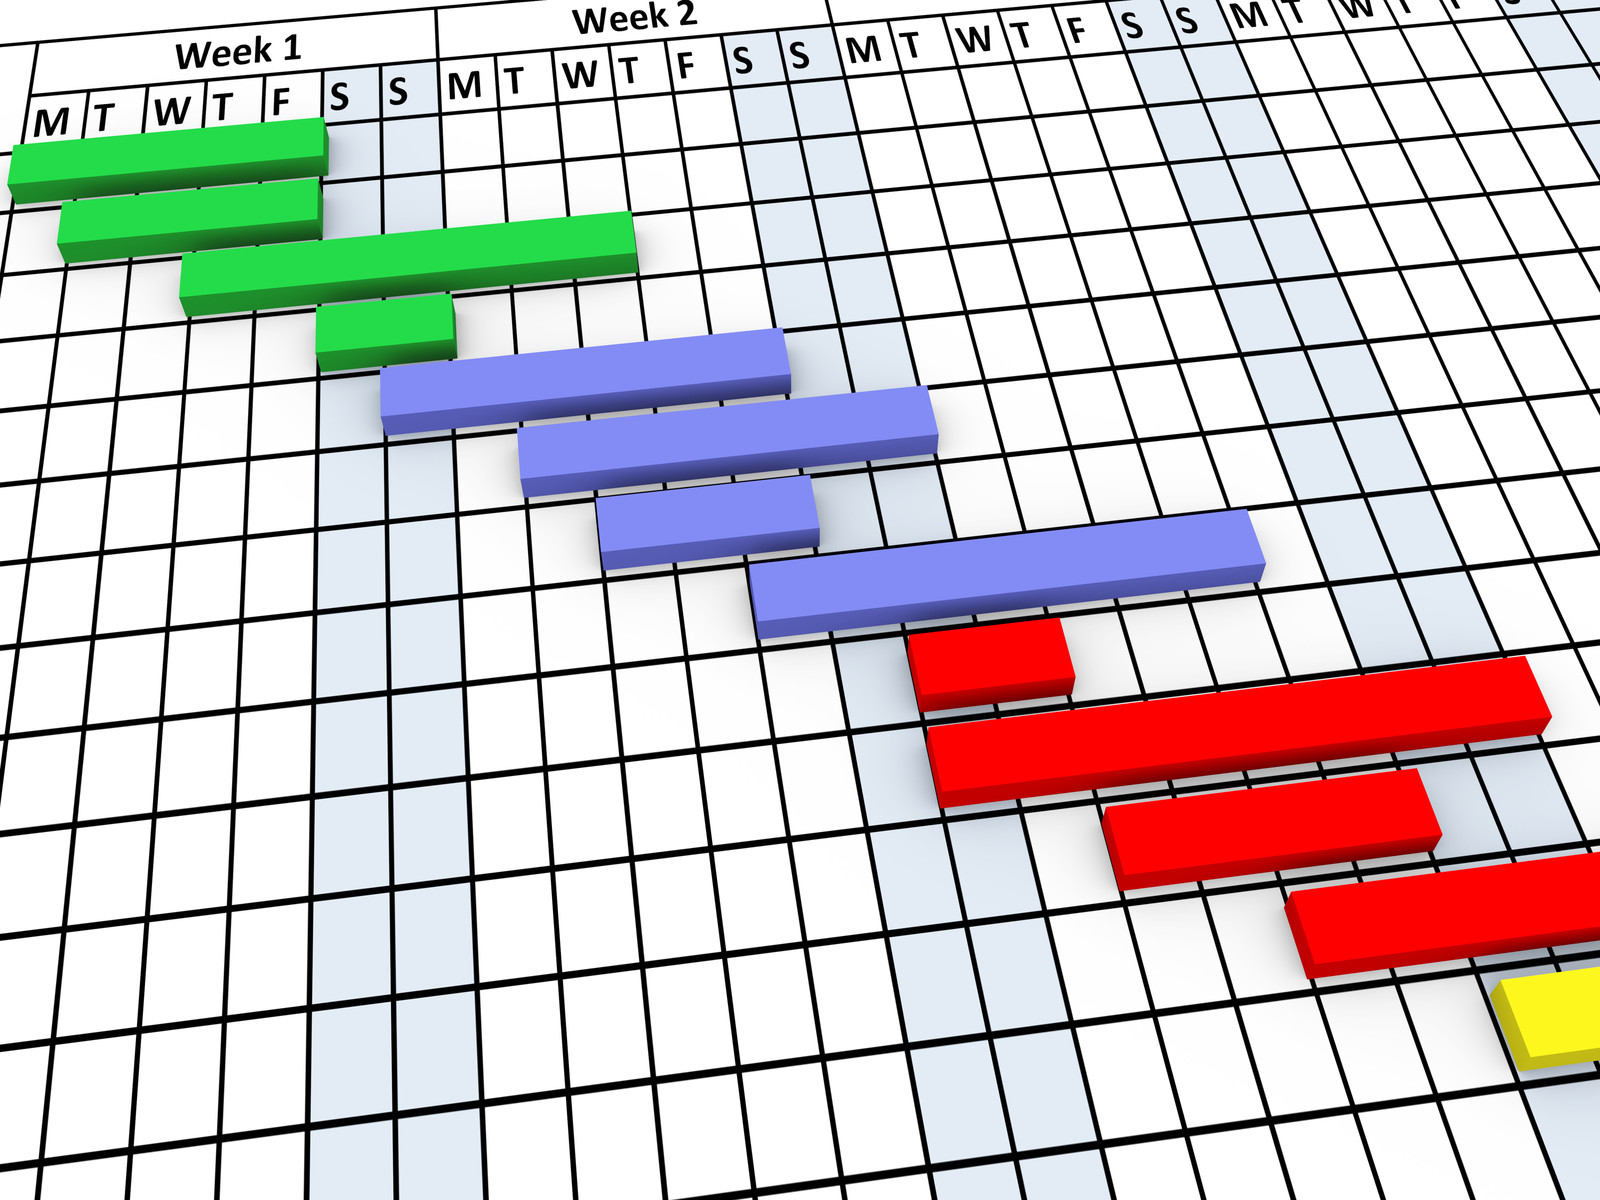 google template gantt chart project management timeline